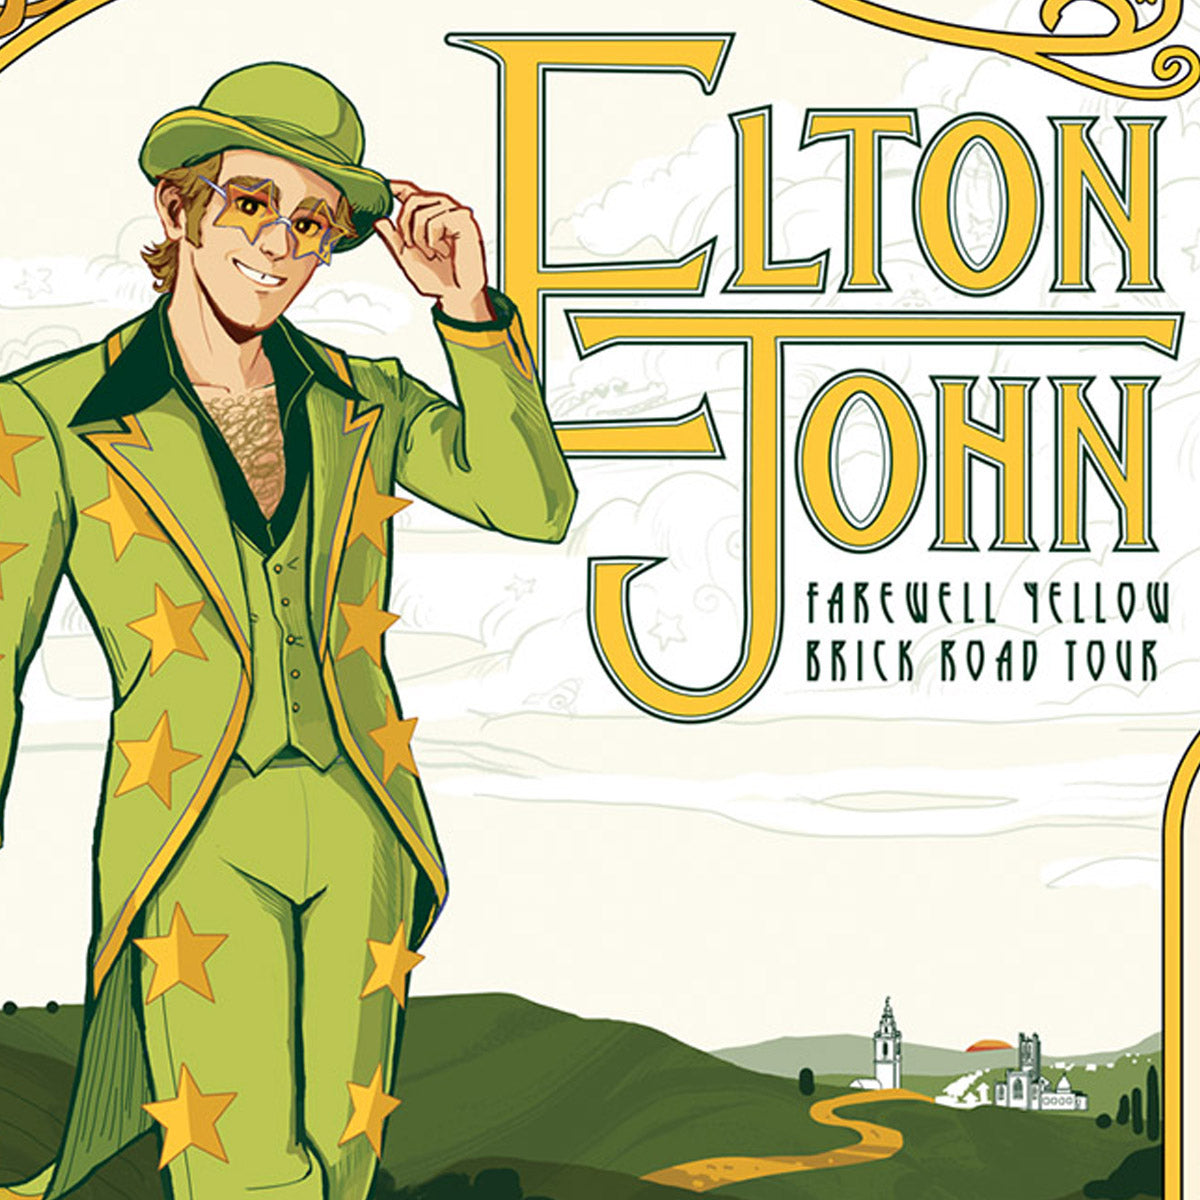 Elton John Cork July 1, 2022 Farewell Yellow Brick Road Tour